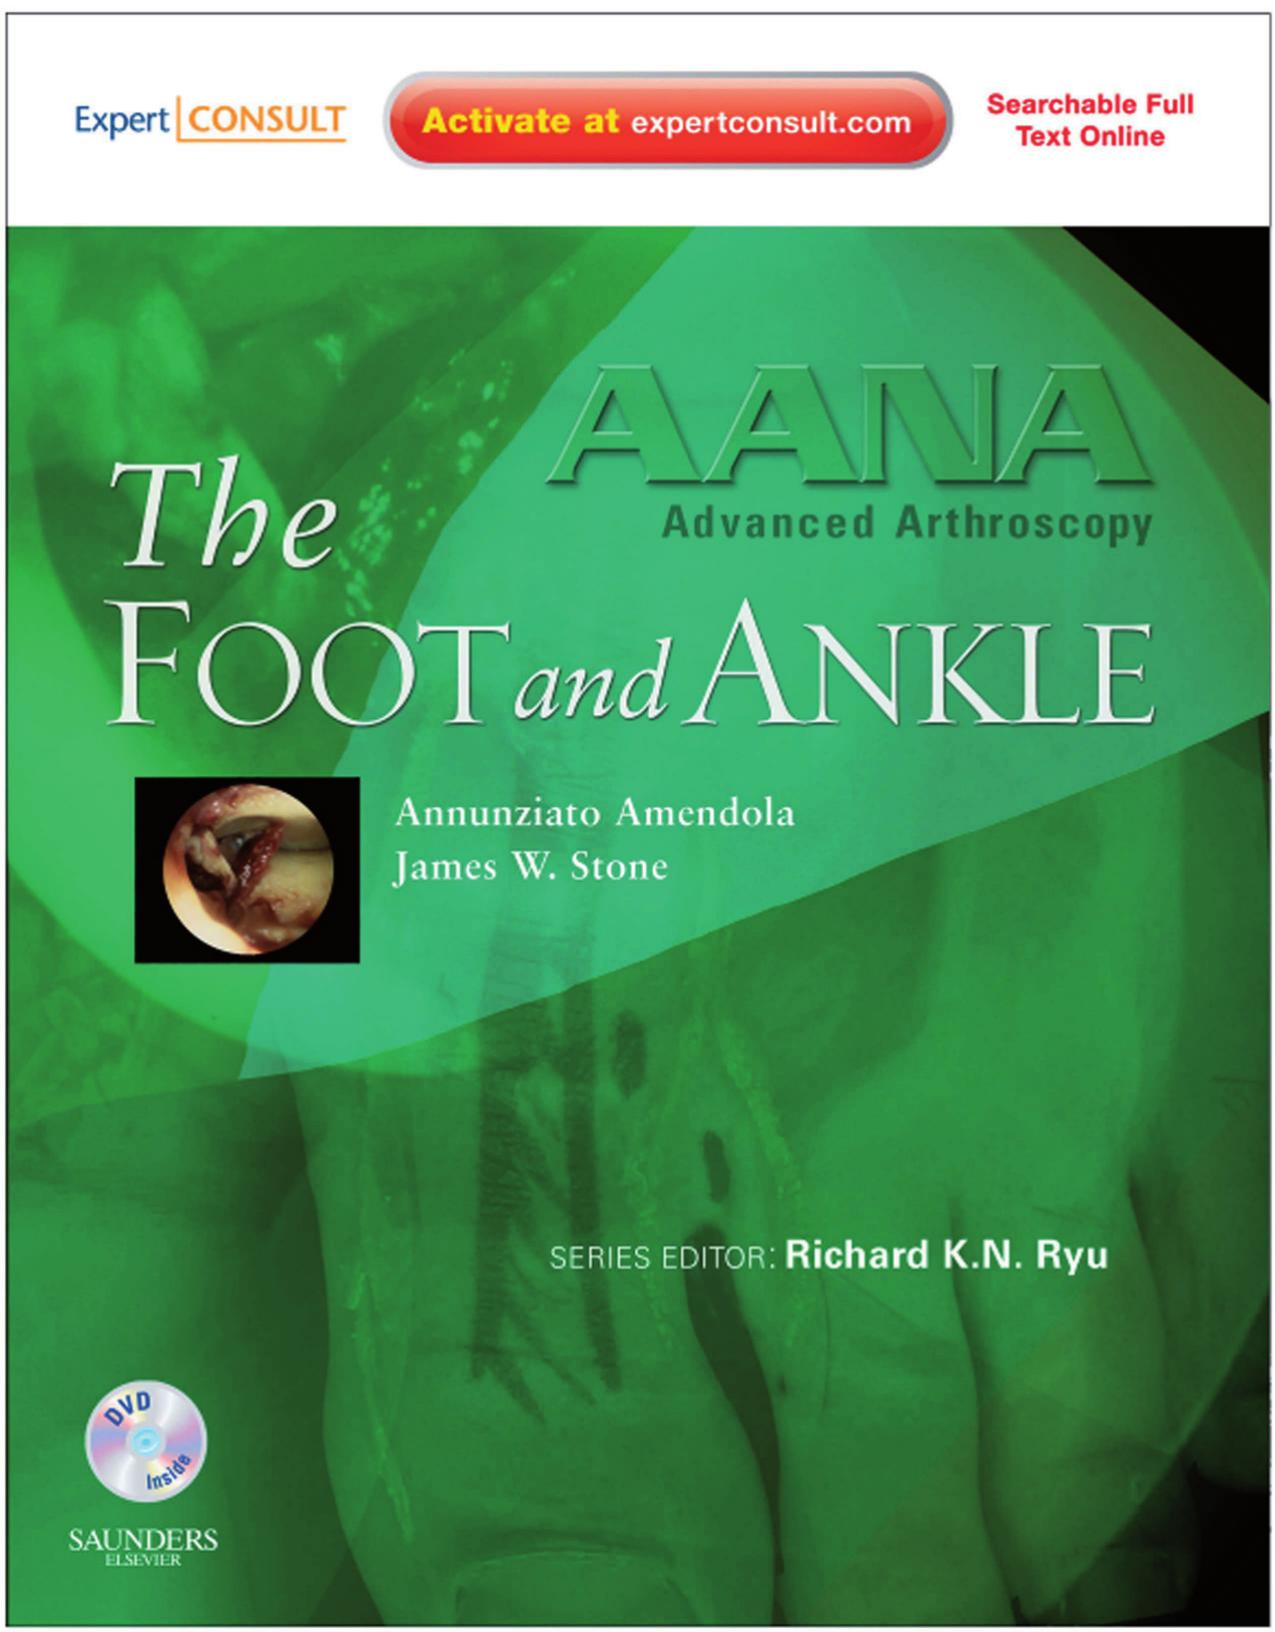 AANA Advanced Arthroscopy The Foot and Ankle - Abdul Gaffar.jpg